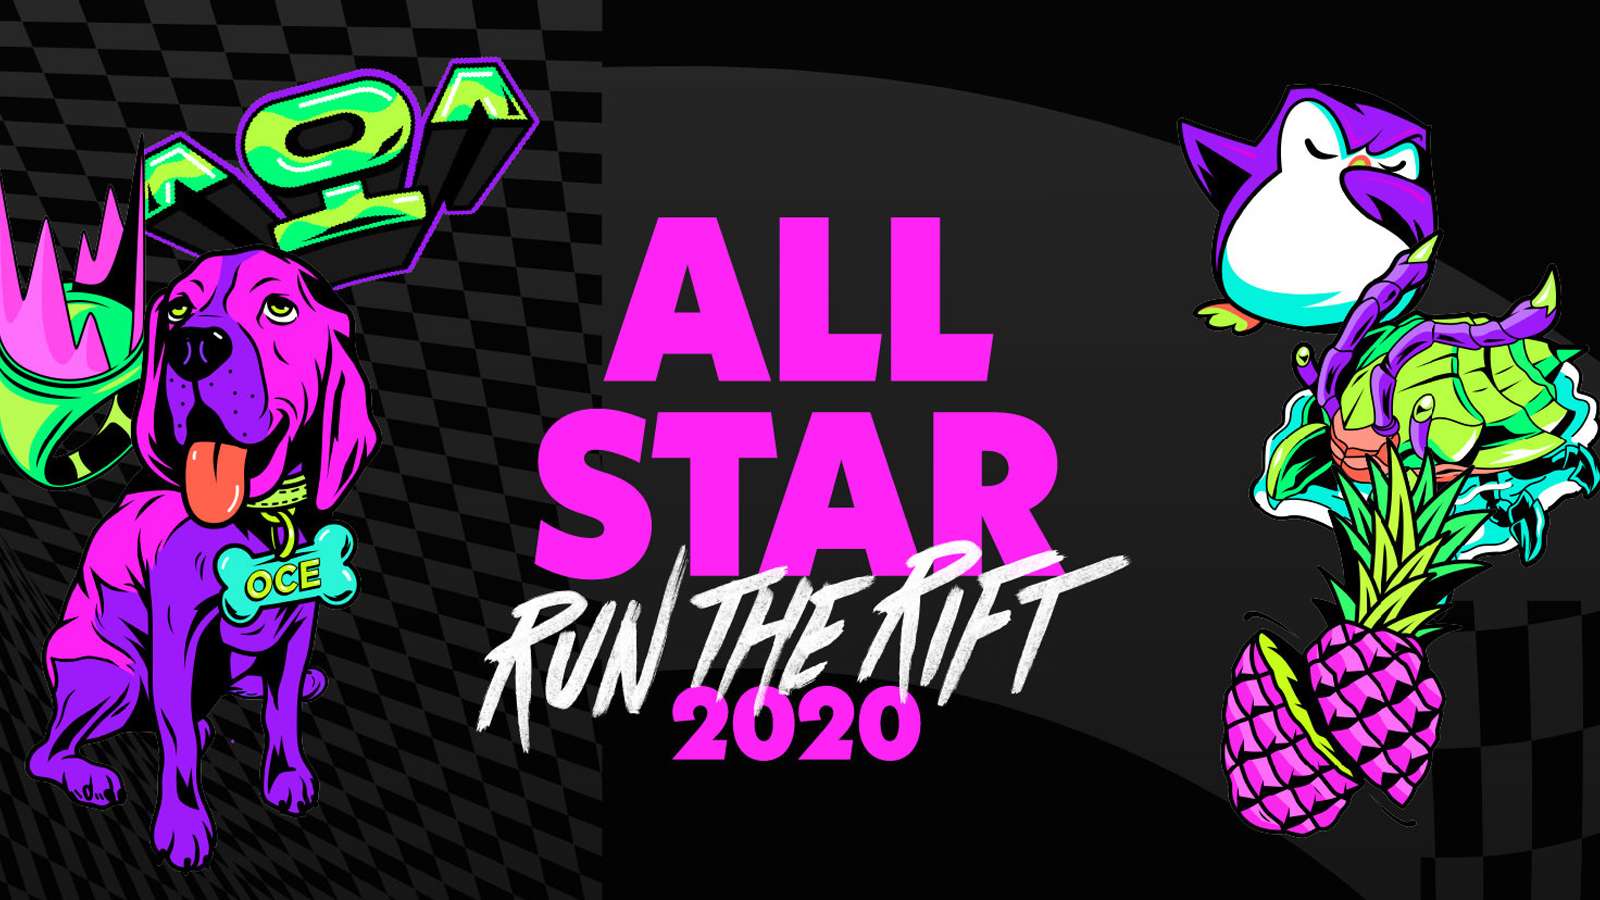 All Star LoL 2020 banner